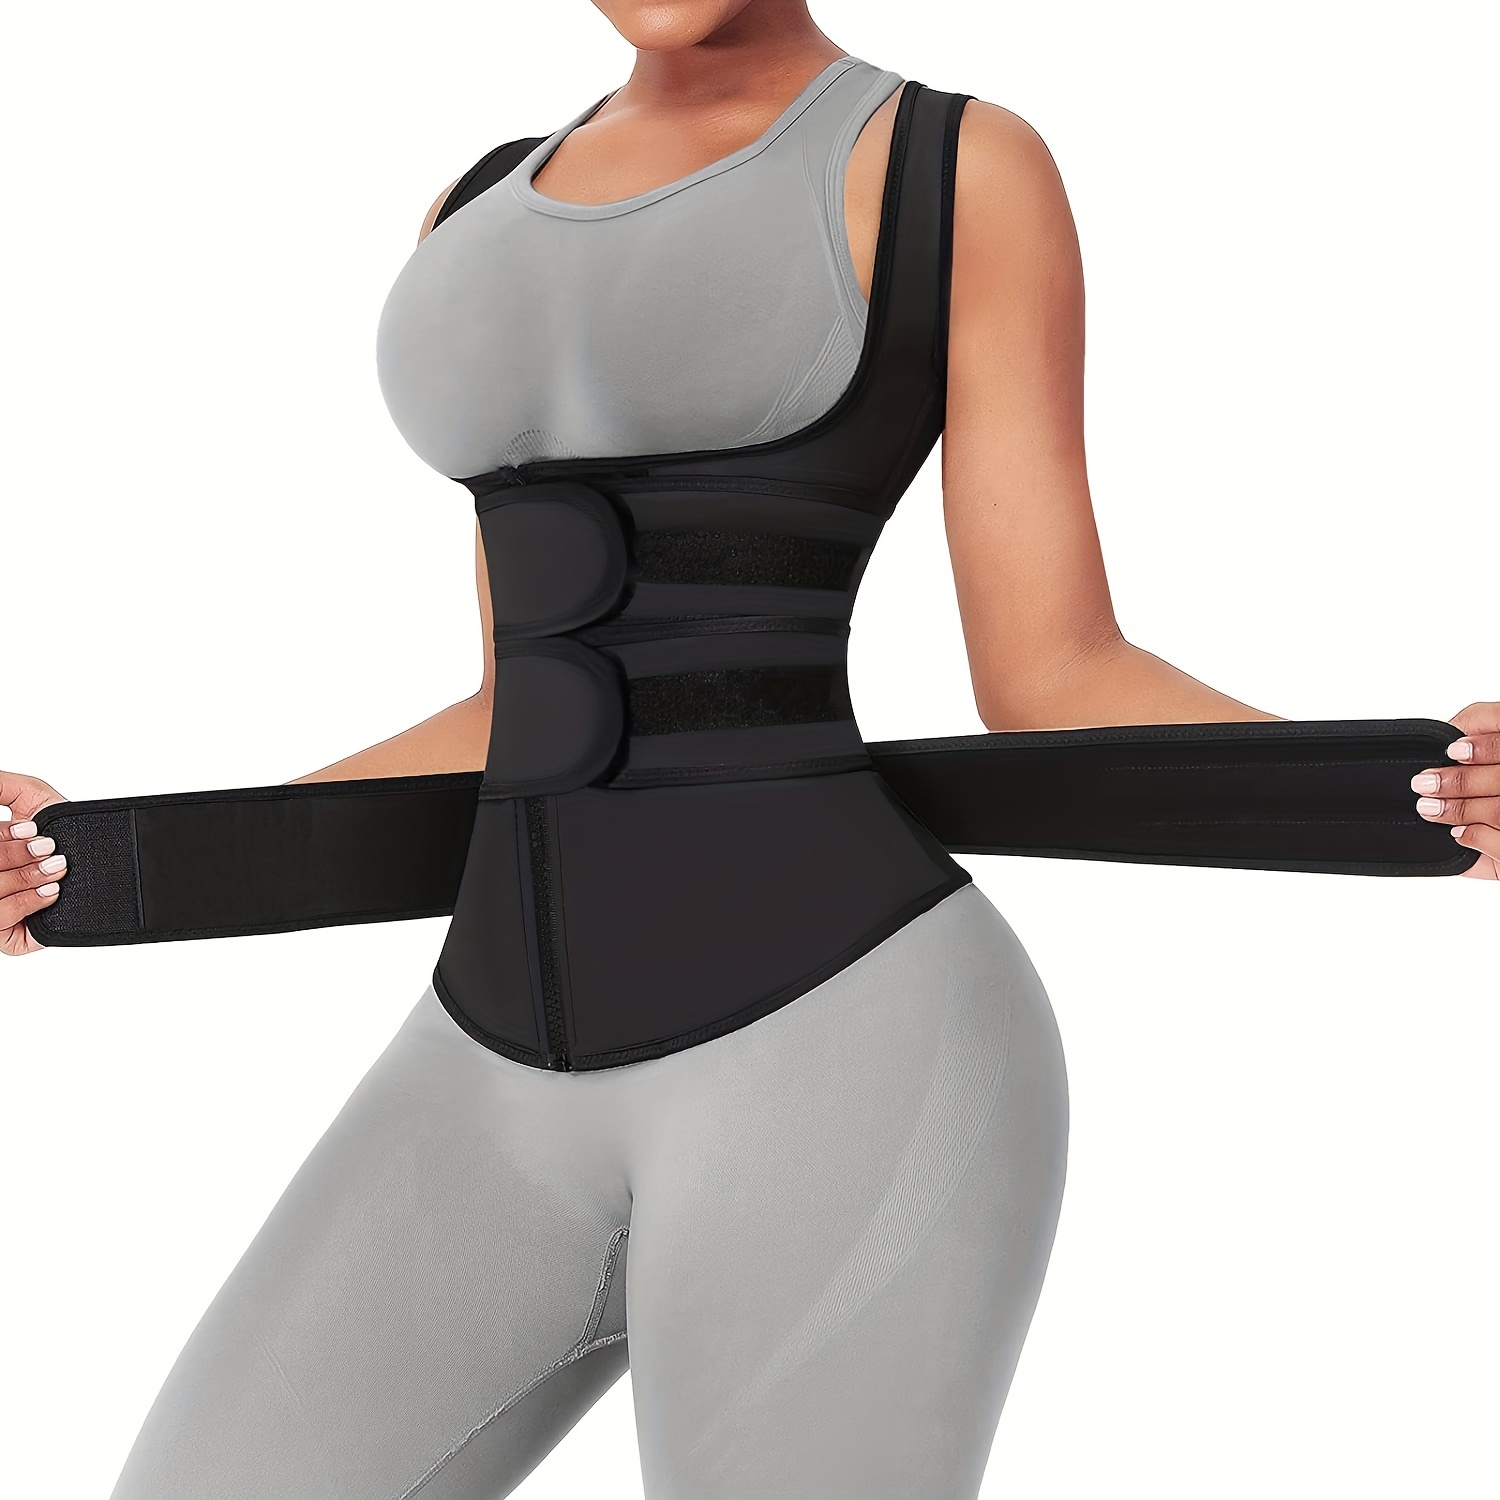 Bodysuit Suit Women Support Shapewear Yoga Clothes Corset Sweat Body  Sculpting Vest Shapeware Waist Band Fitness Shorts 